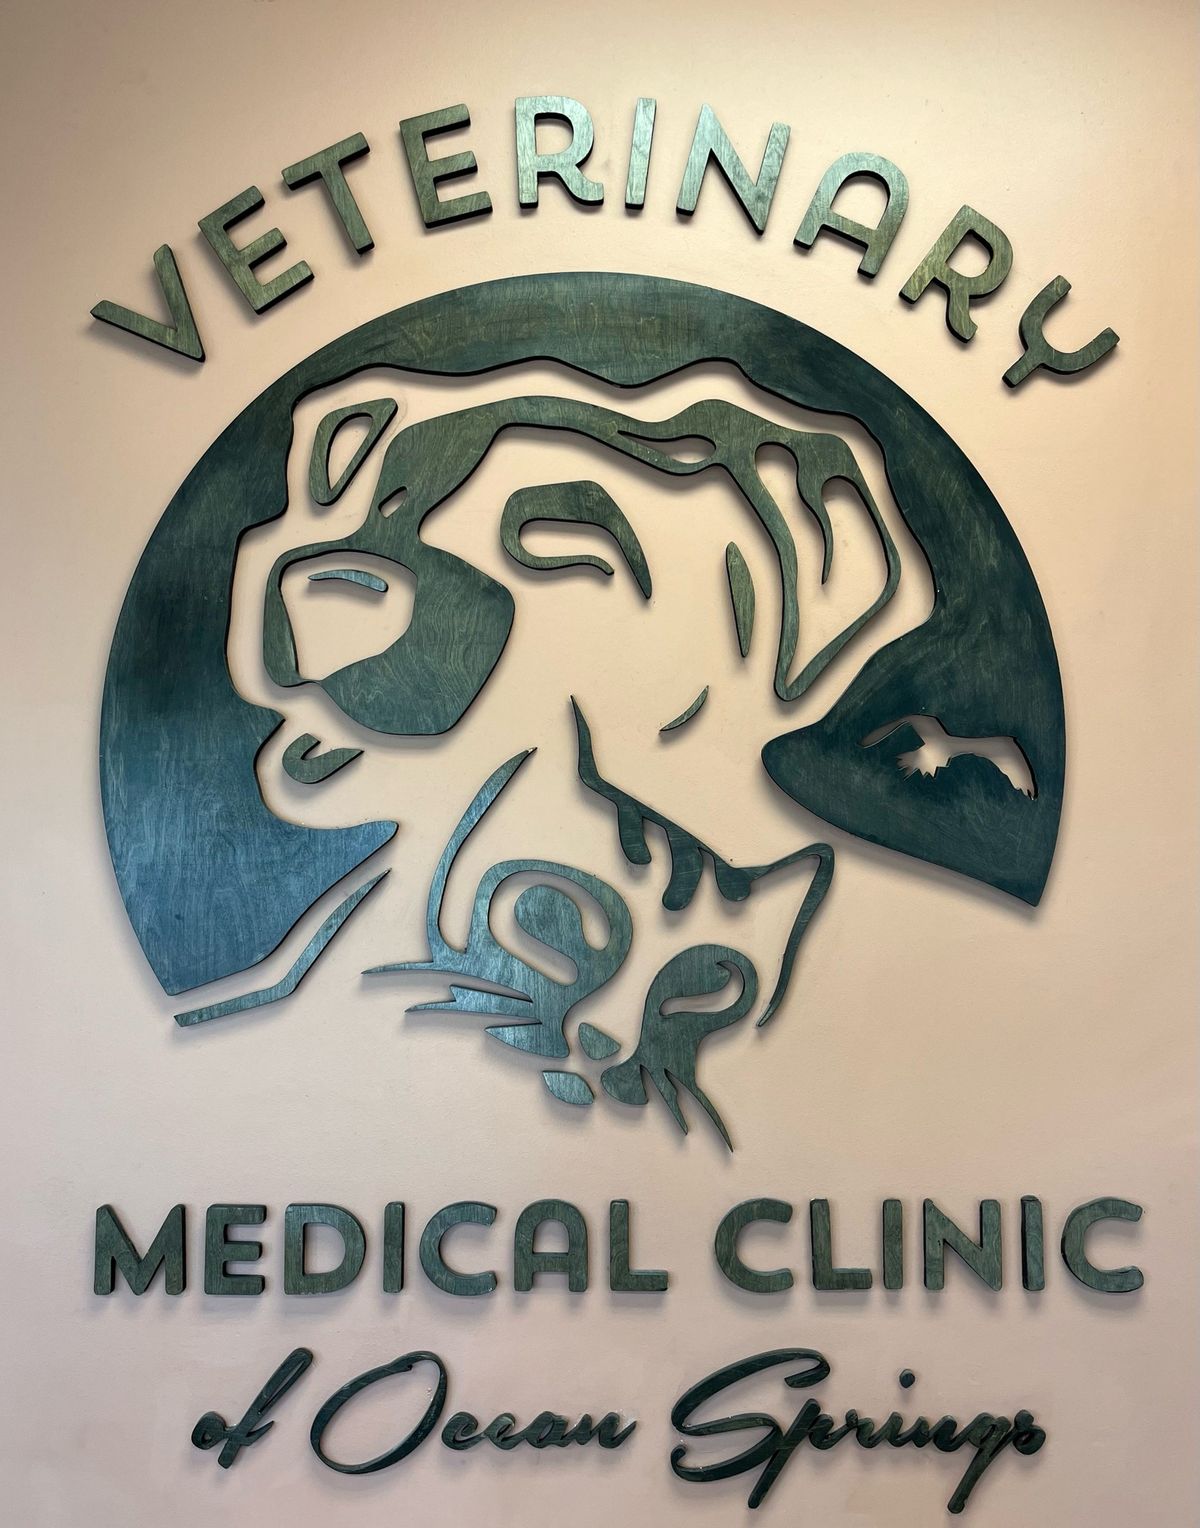 Veterinary Medical Clinic of Ocean Springs 5 Year Anniversary Celebration